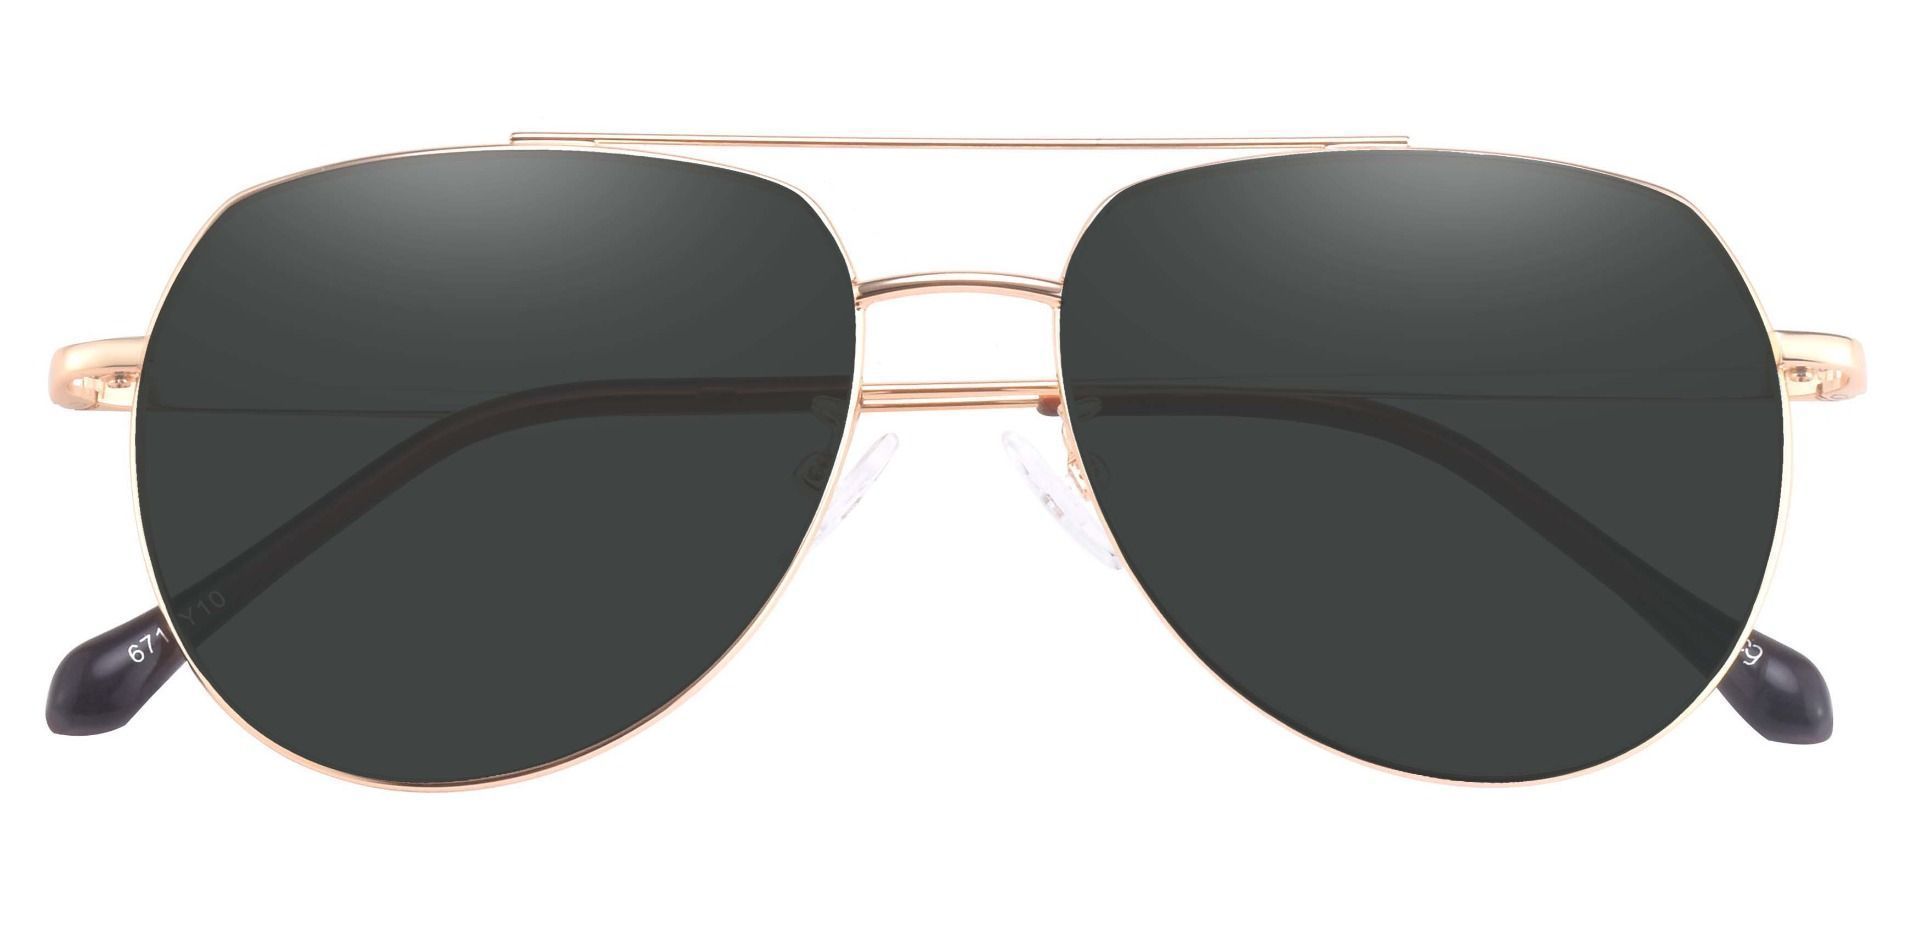 Genesis Aviator Prescription Sunglasses - Gold Frame With Gray Lenses ...